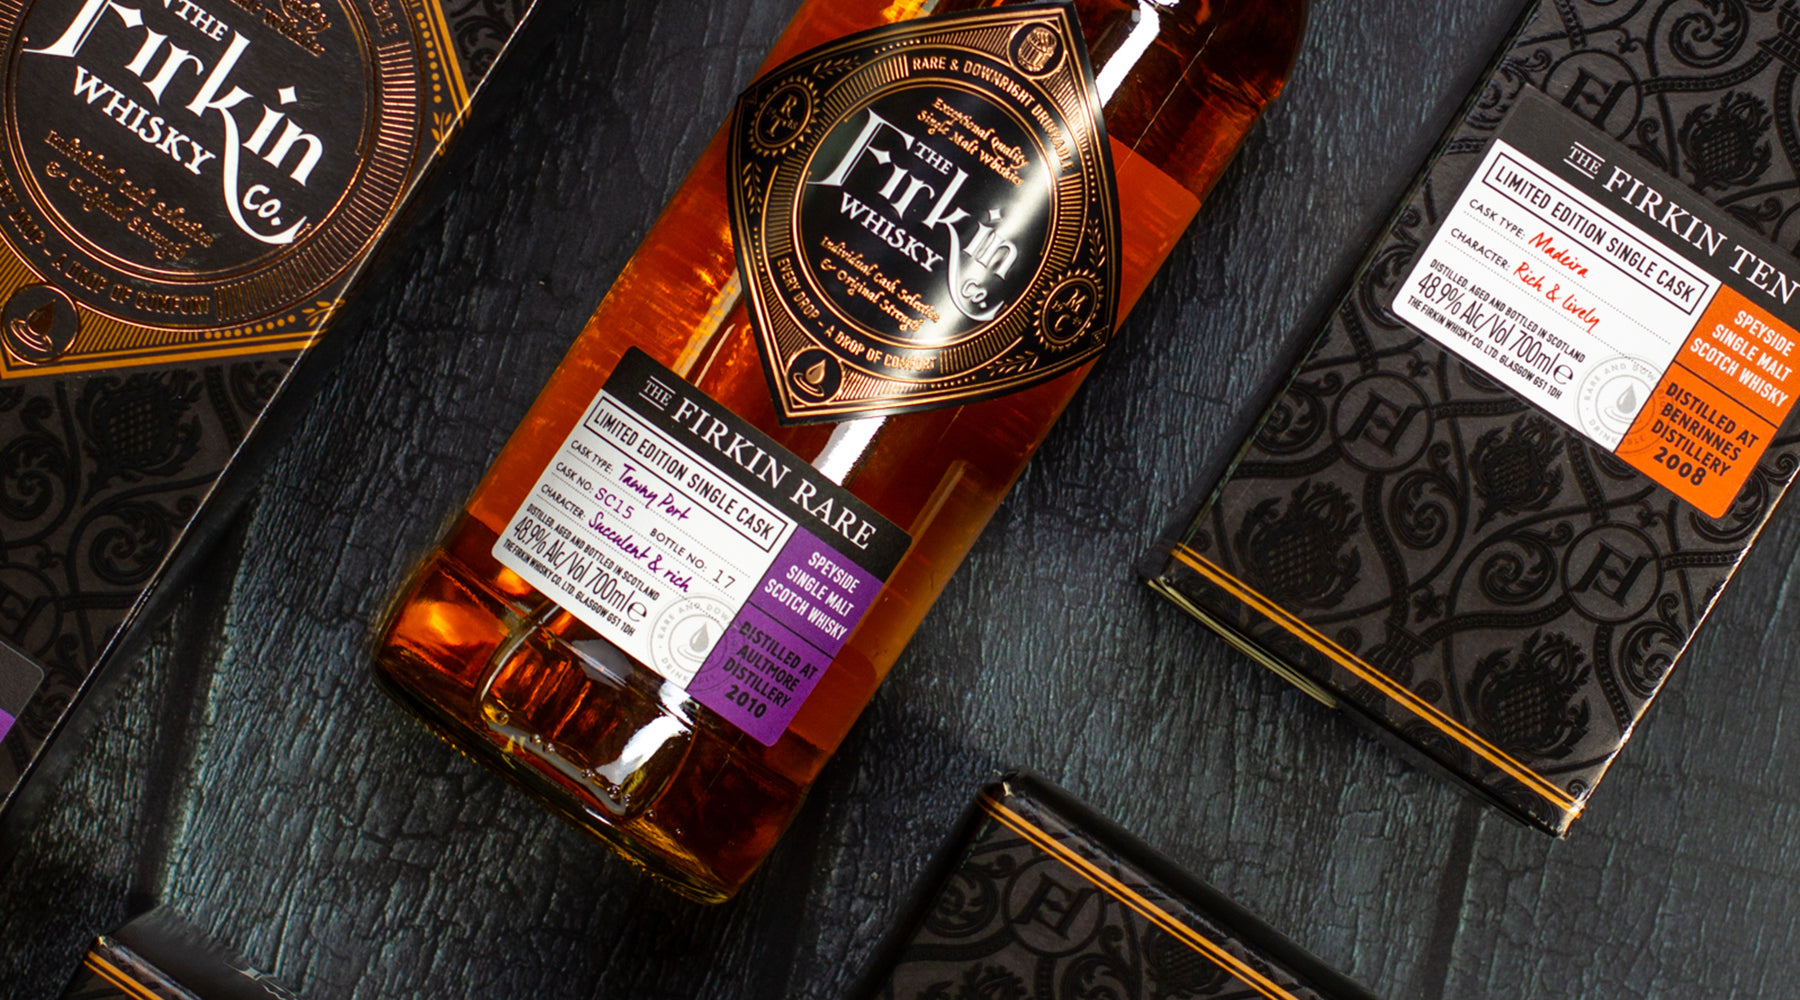 A Firkin Rare Single Malt Scotch Whisky